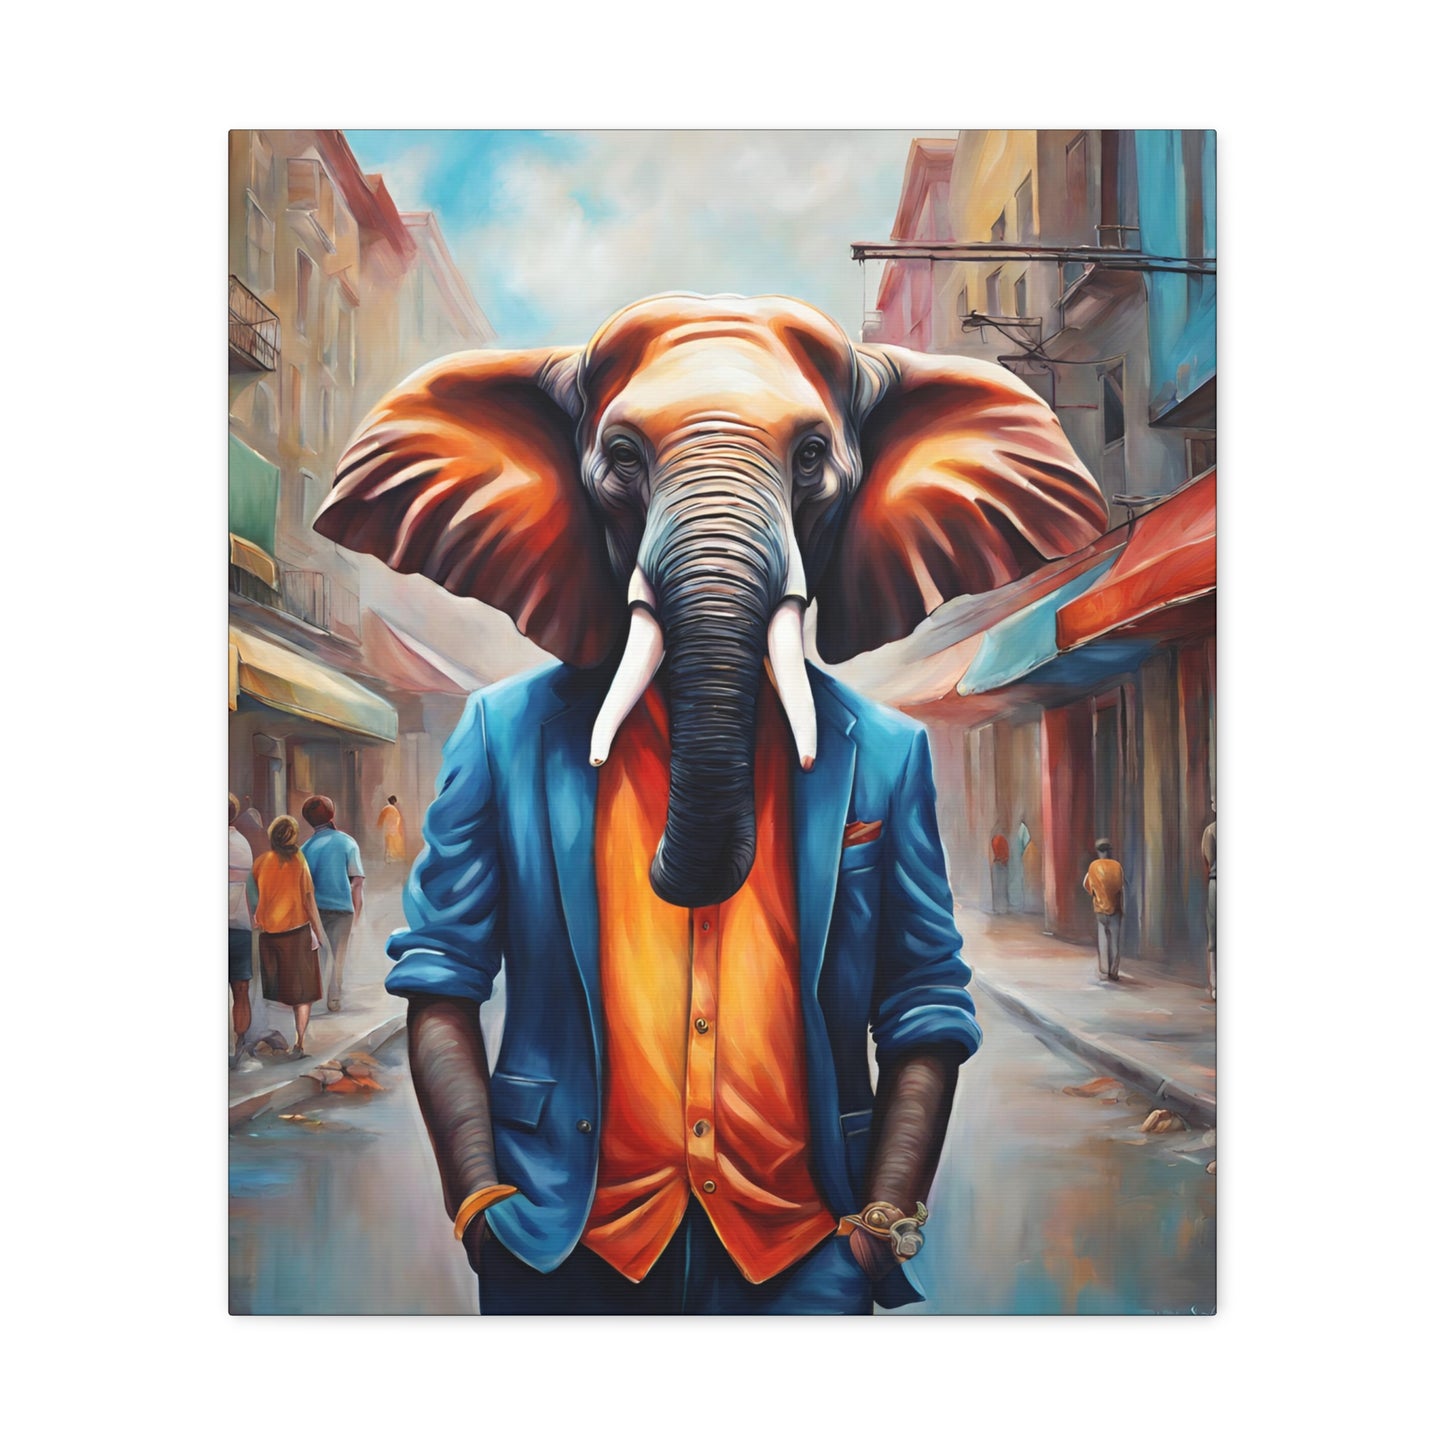 Canvas Gallery Wraps - Animal Life Elephant